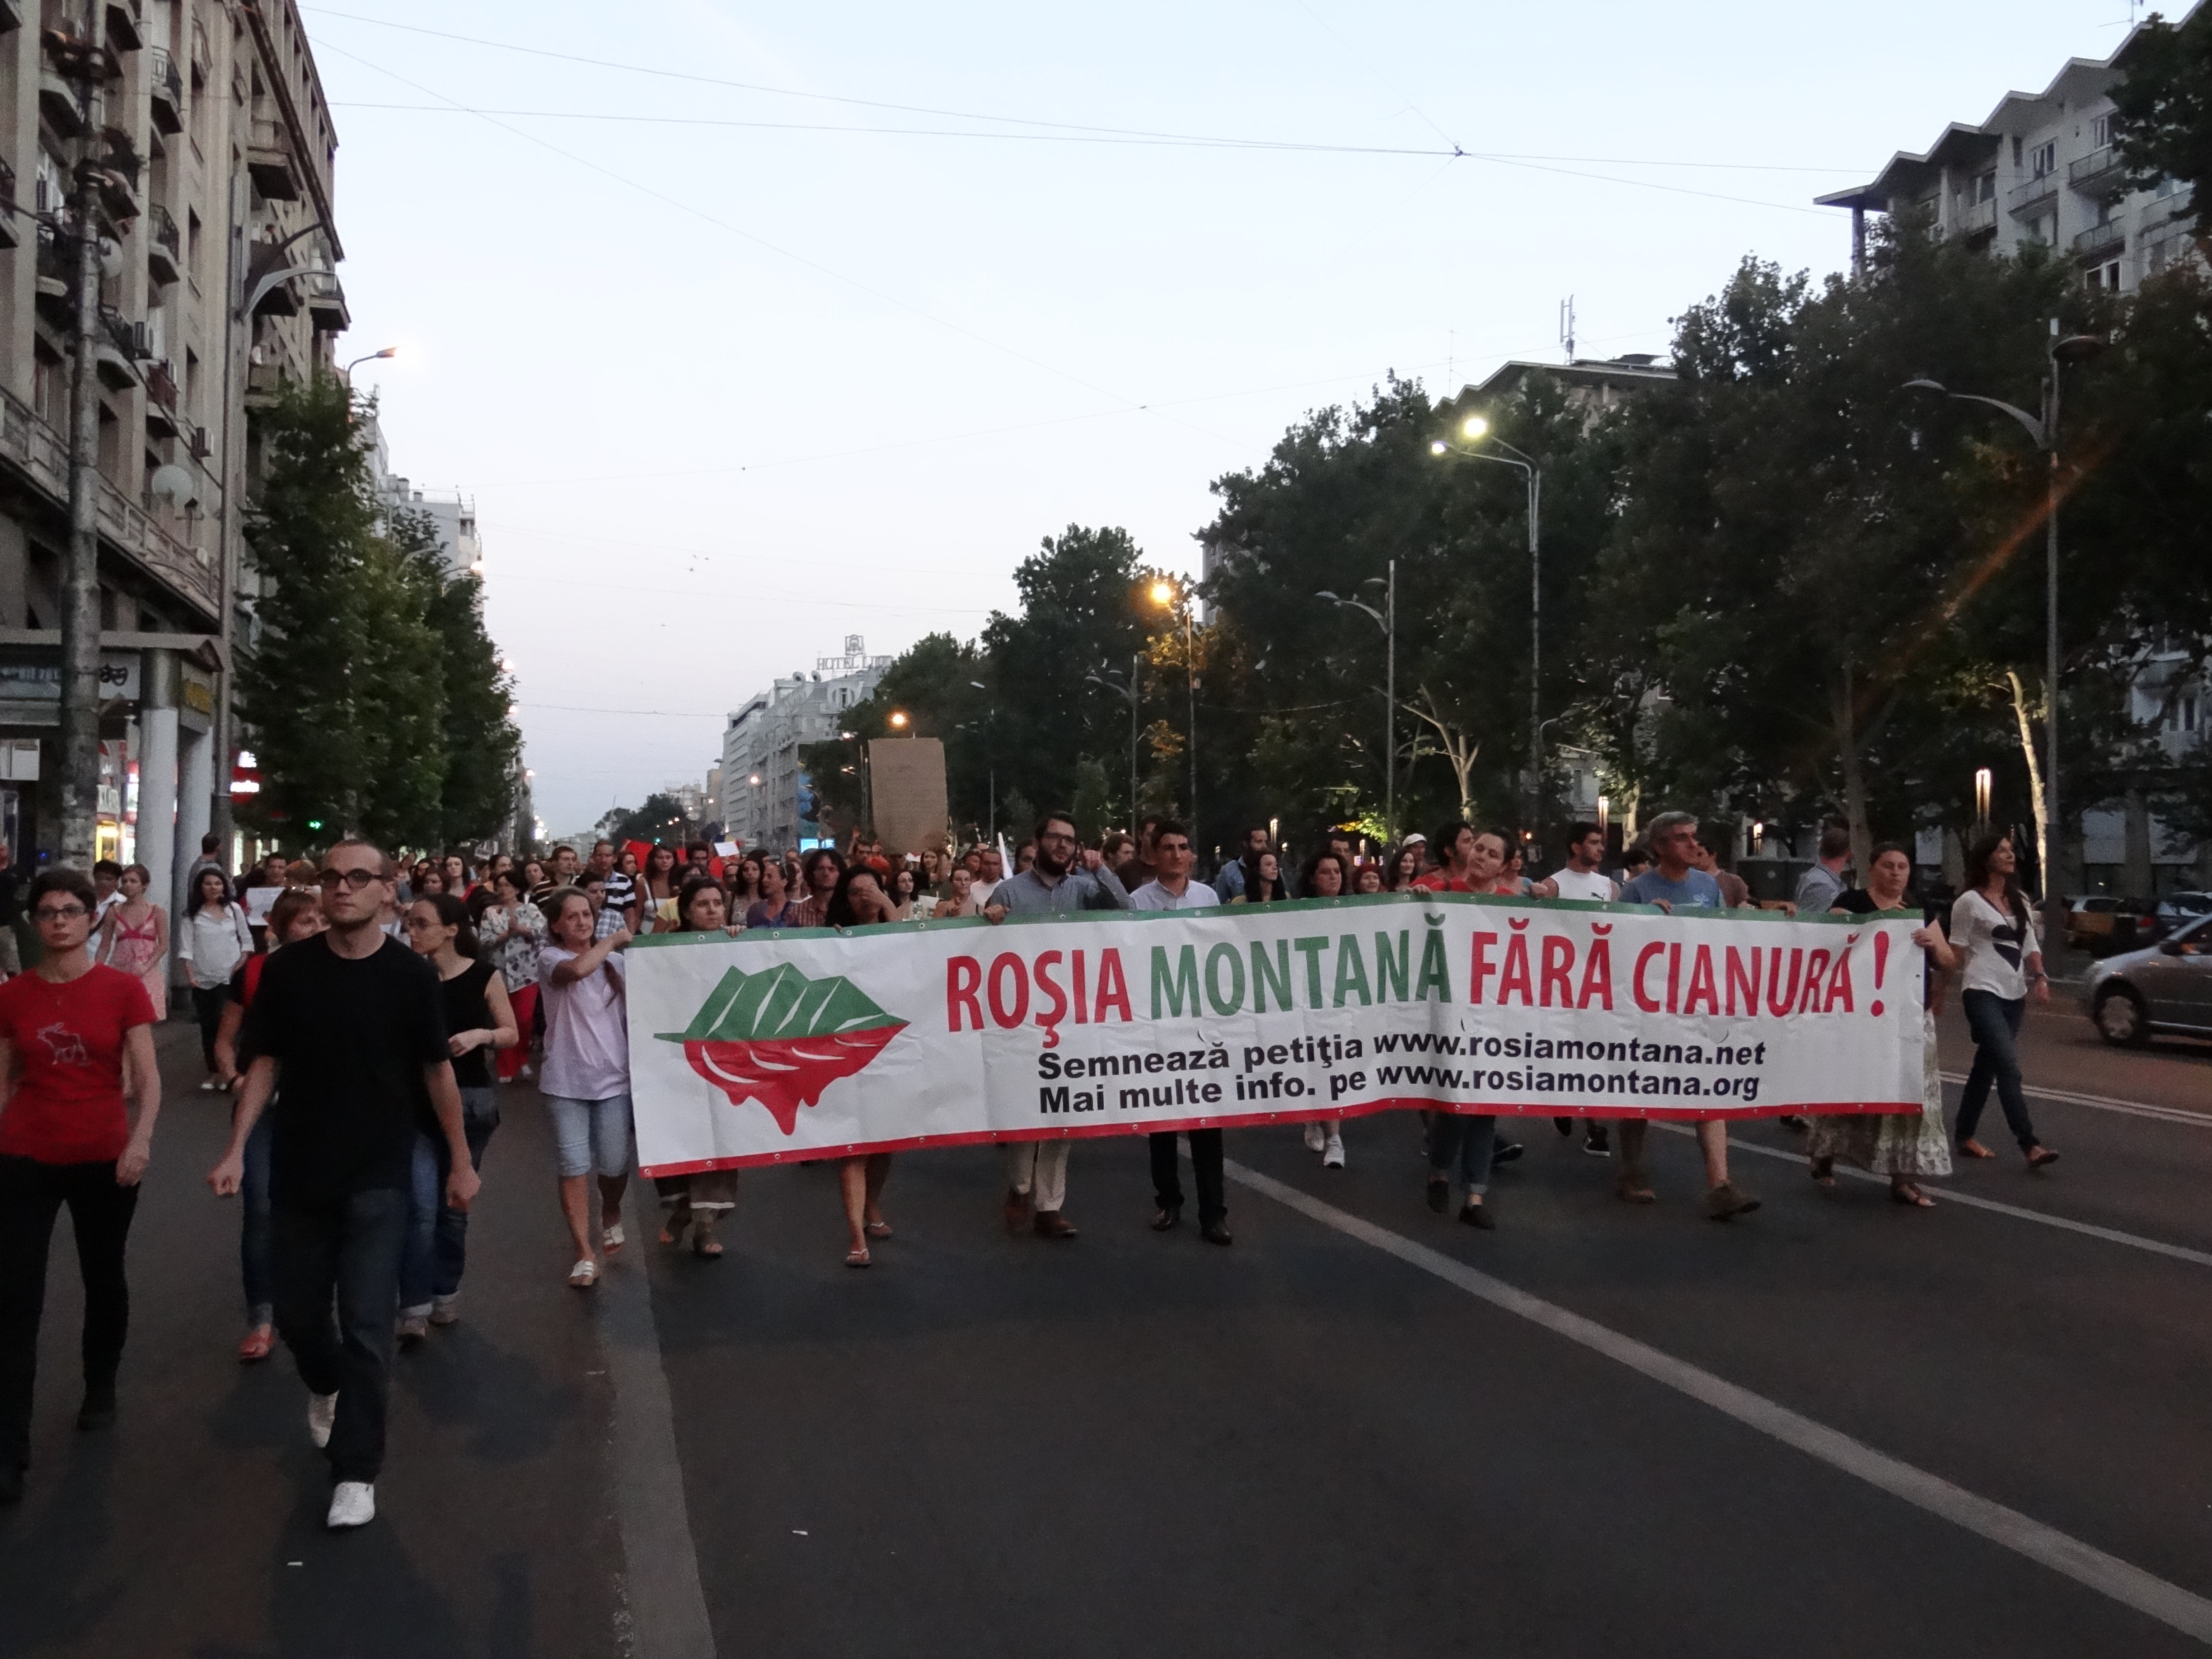 Rosia Montana's movement for democratic justice